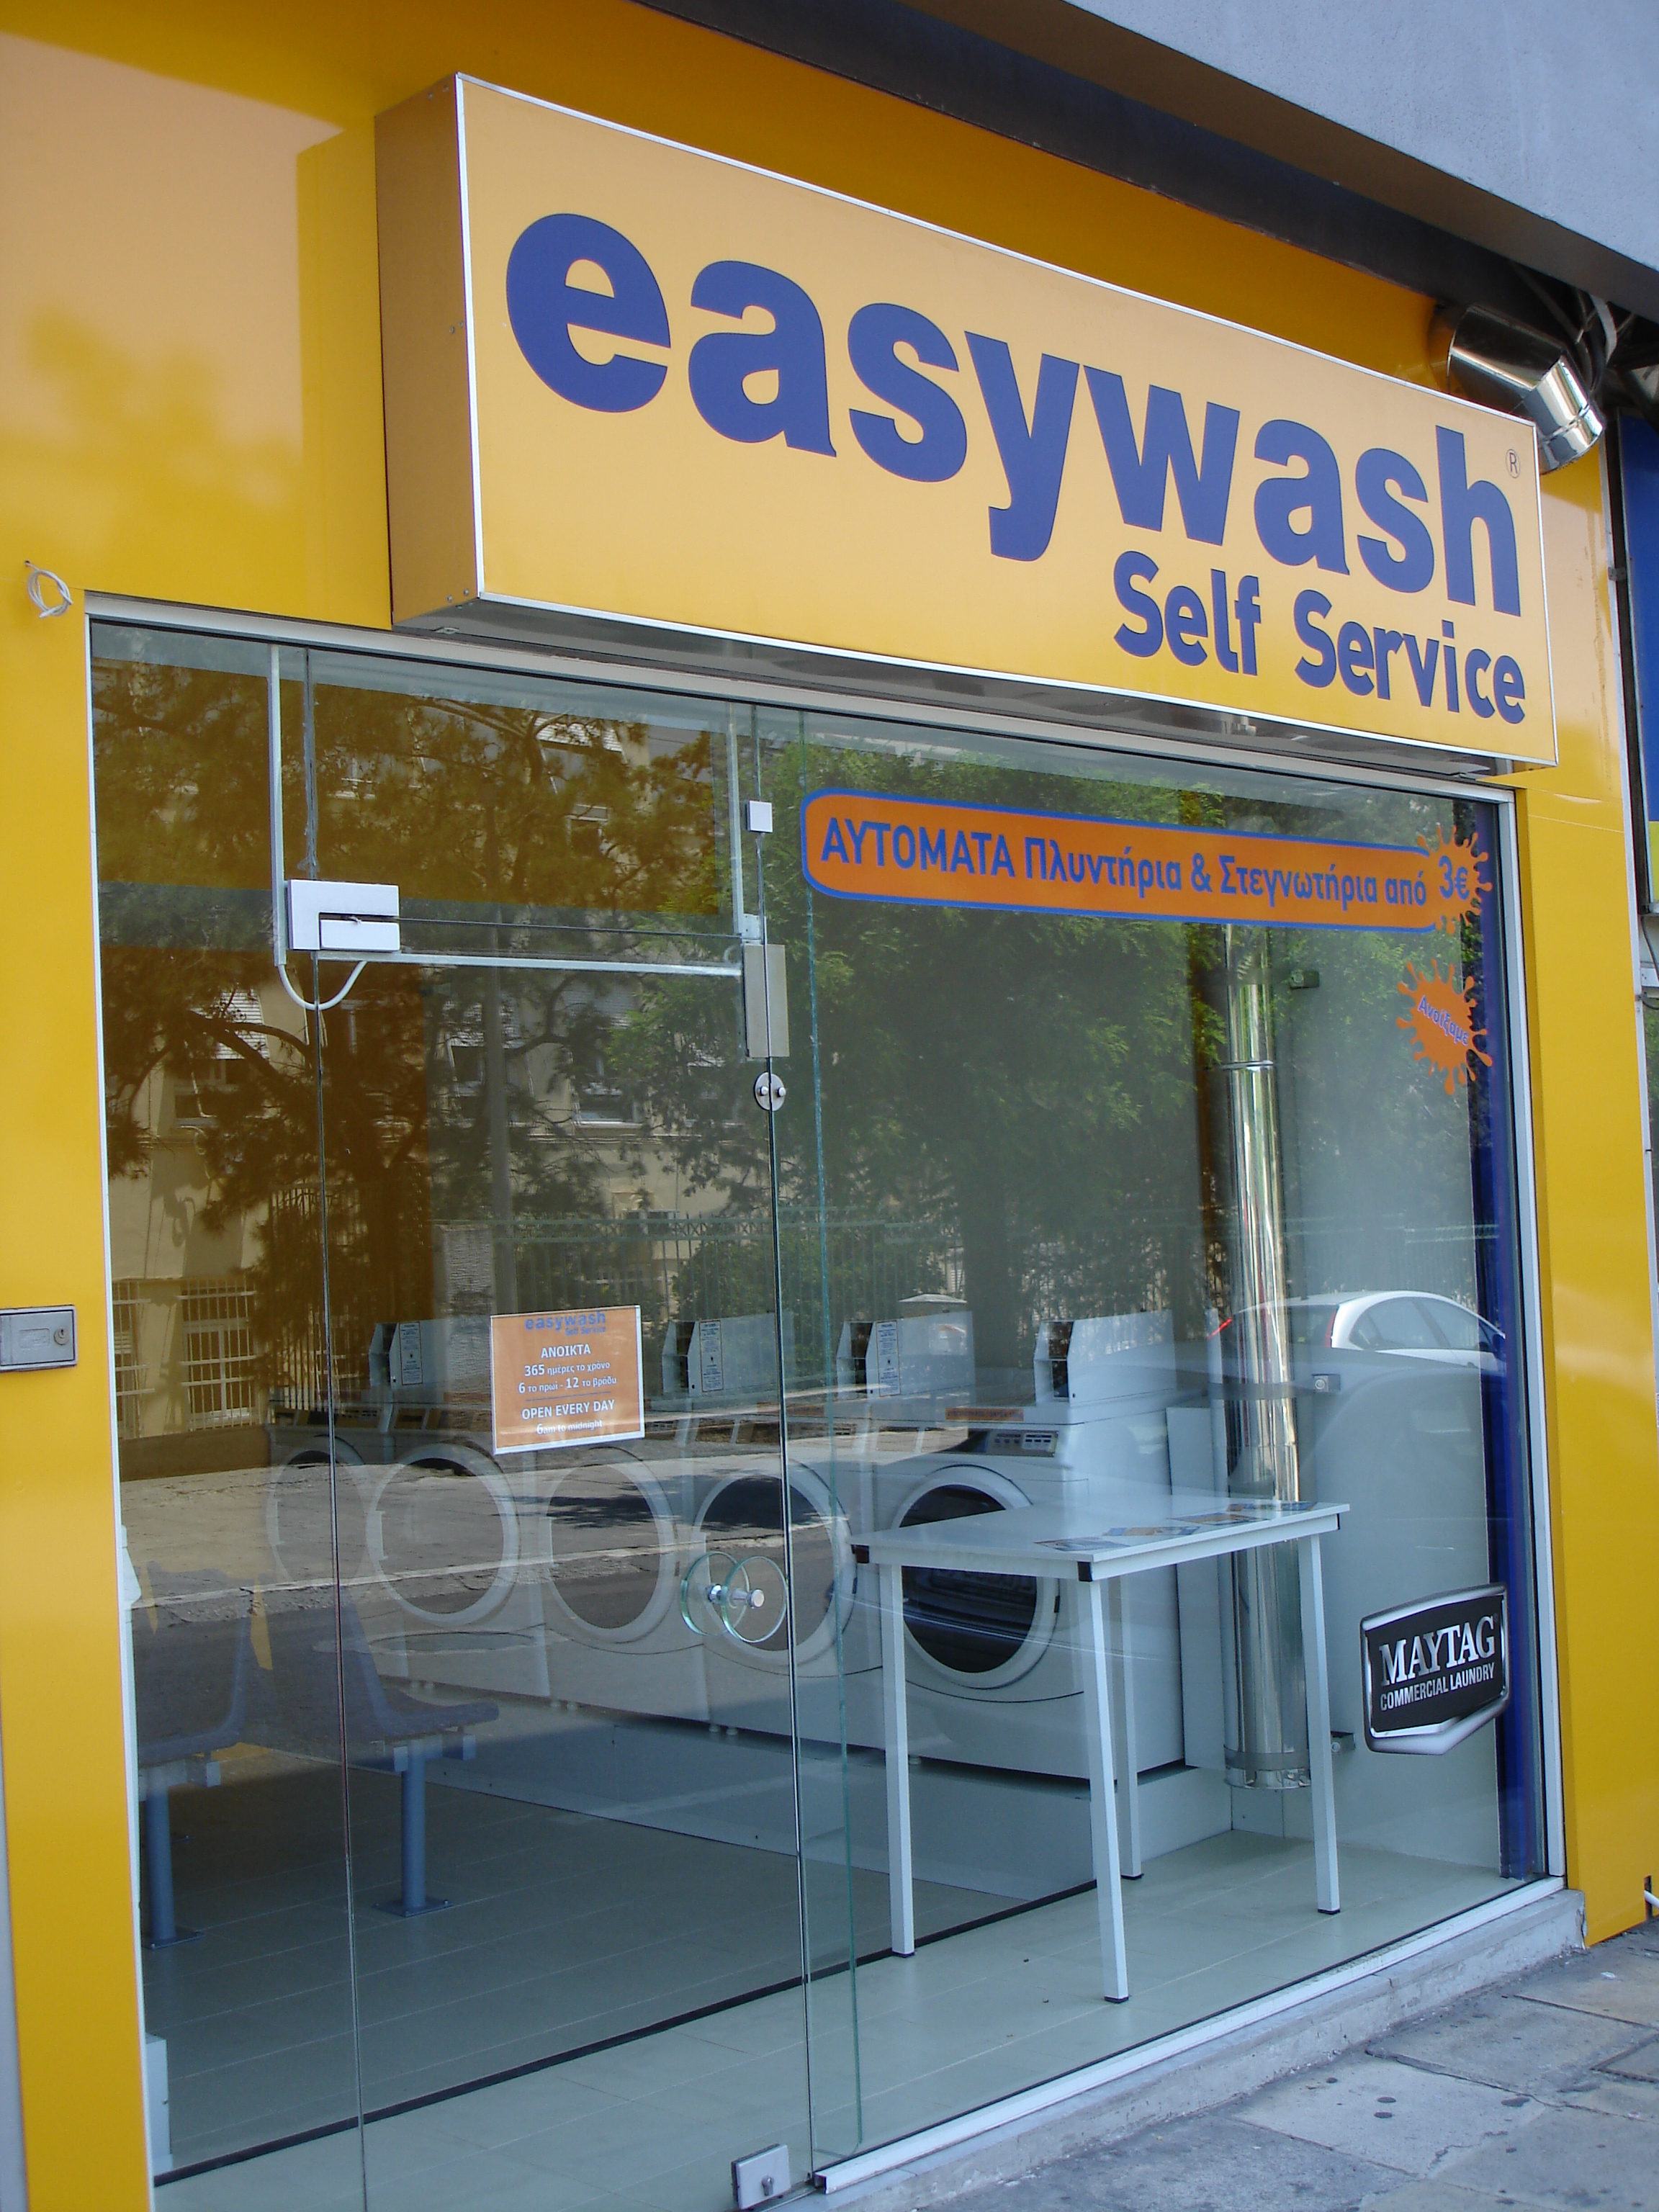 Easywash Self Service Laundry